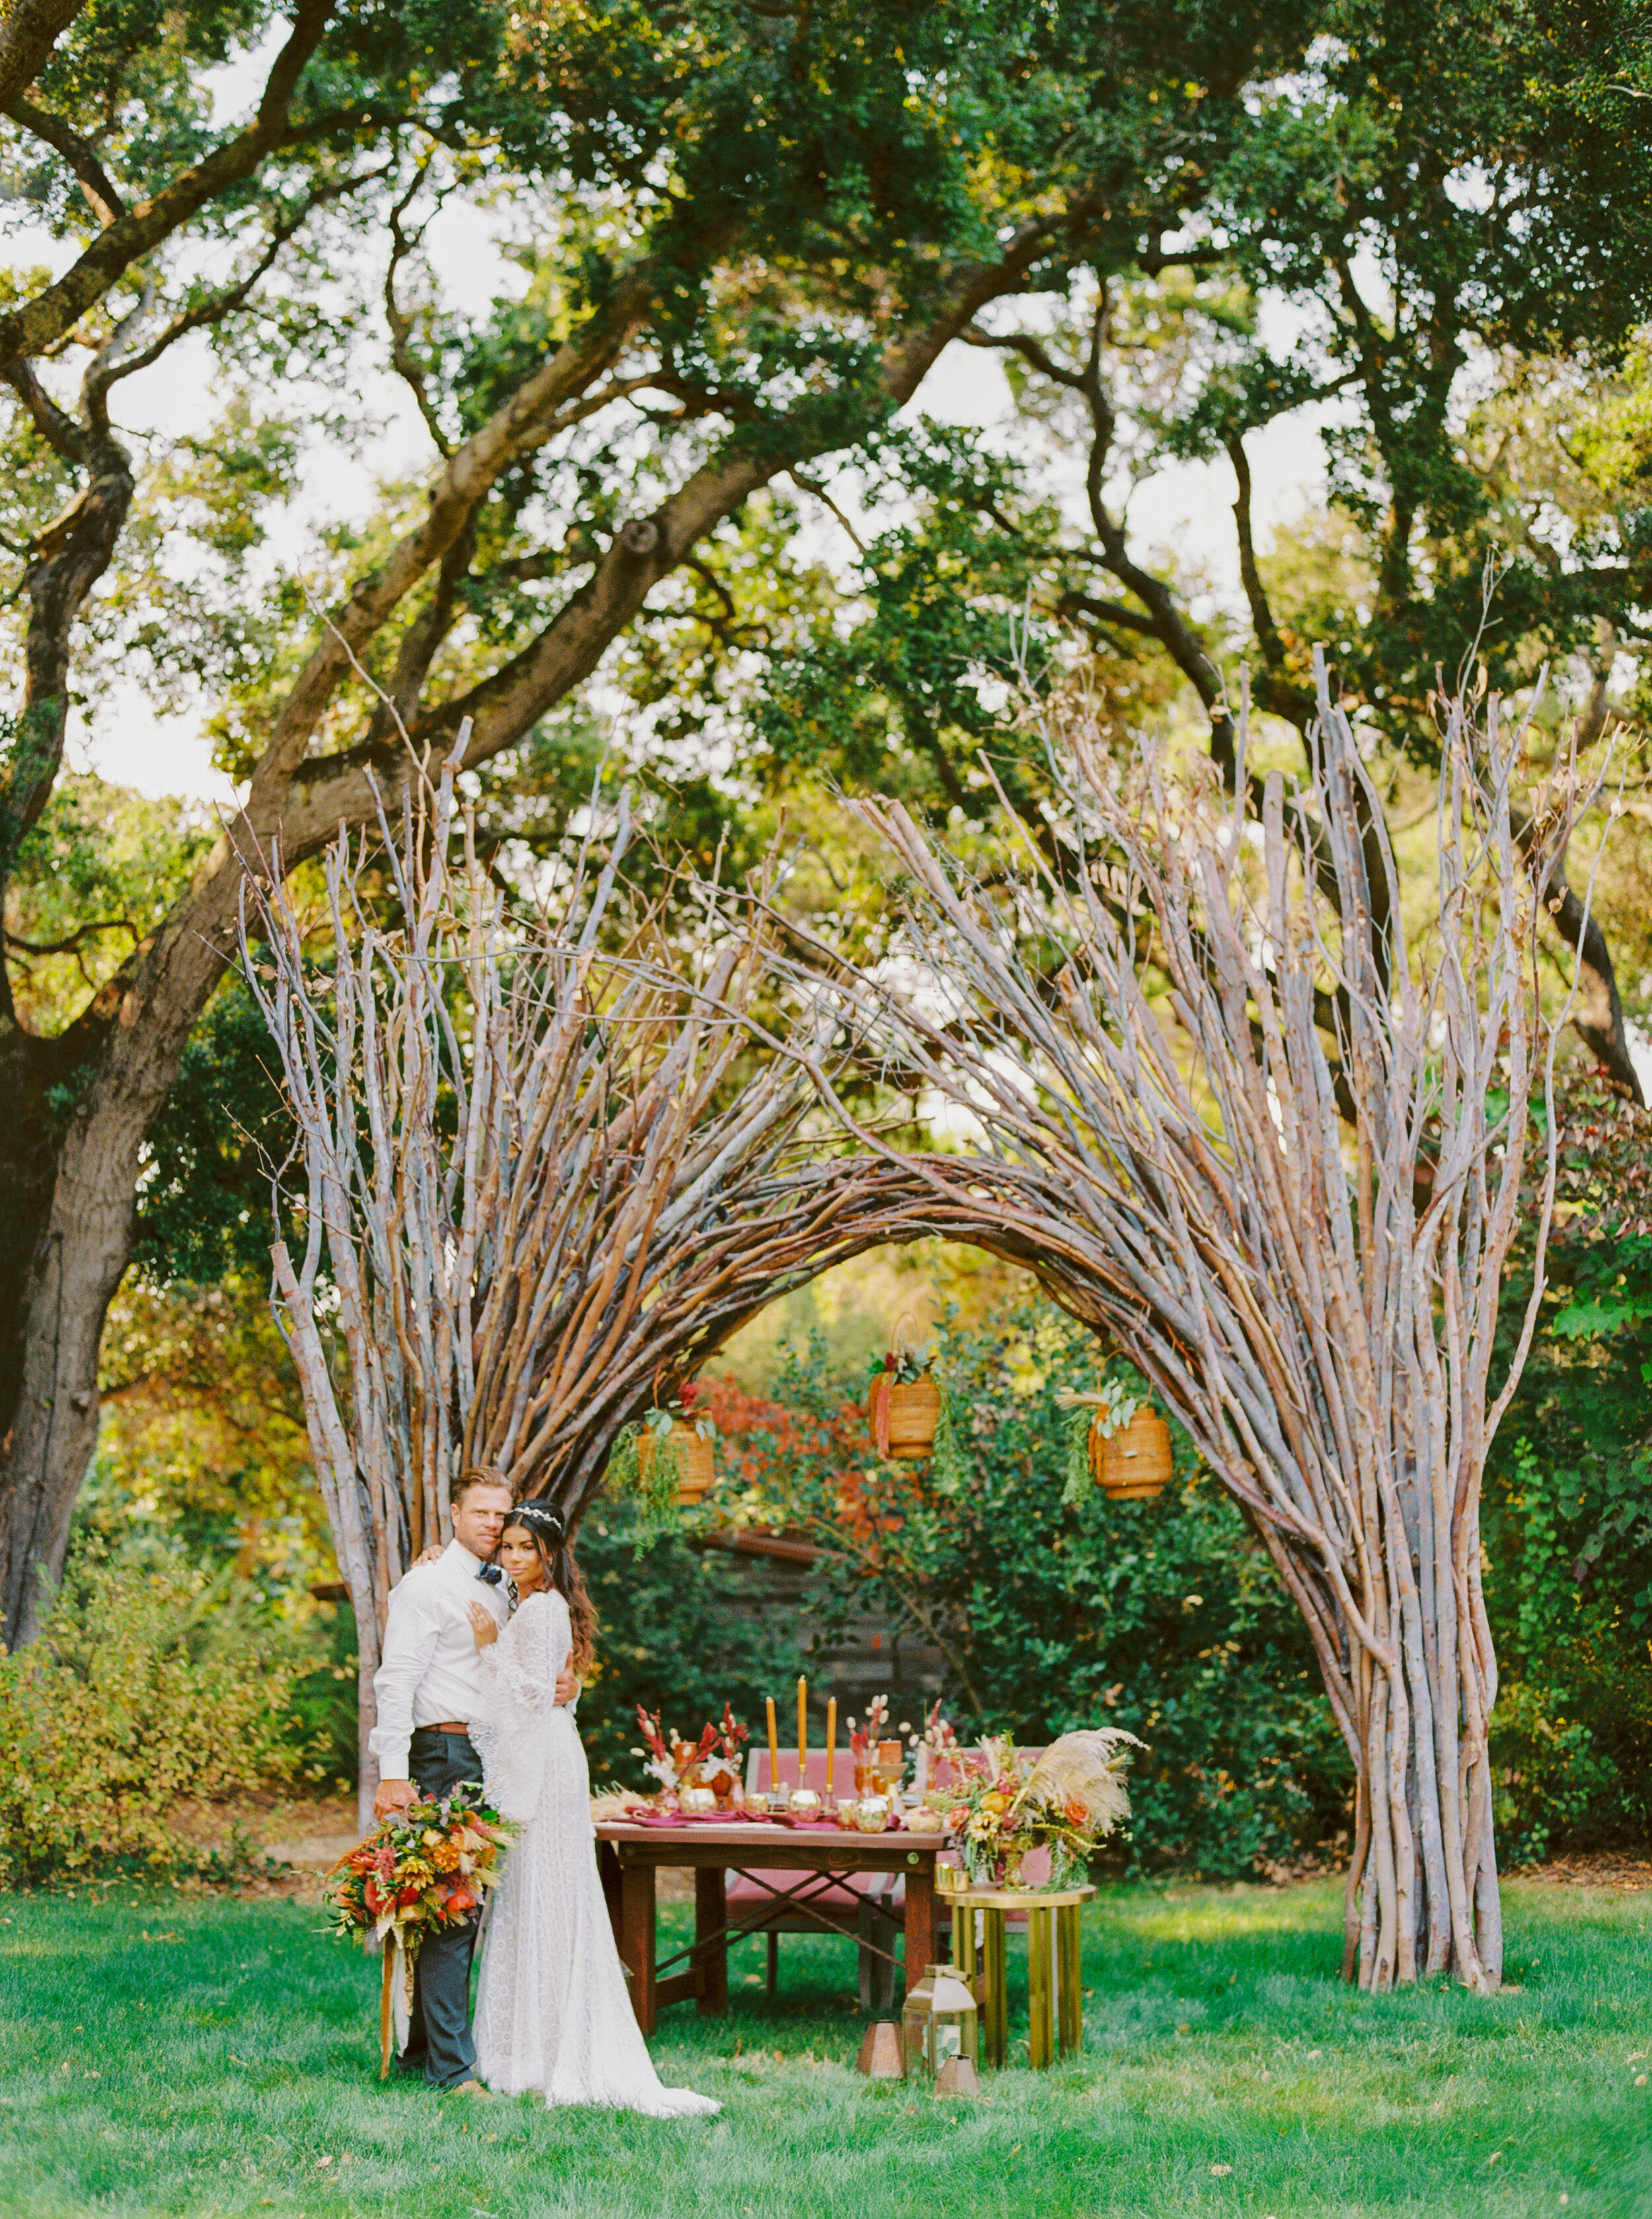 Sarahi Hadden - An Earthy Summer Boho Inspired Wedding with Sunset Hues at Gardener Ranch-113.jpg